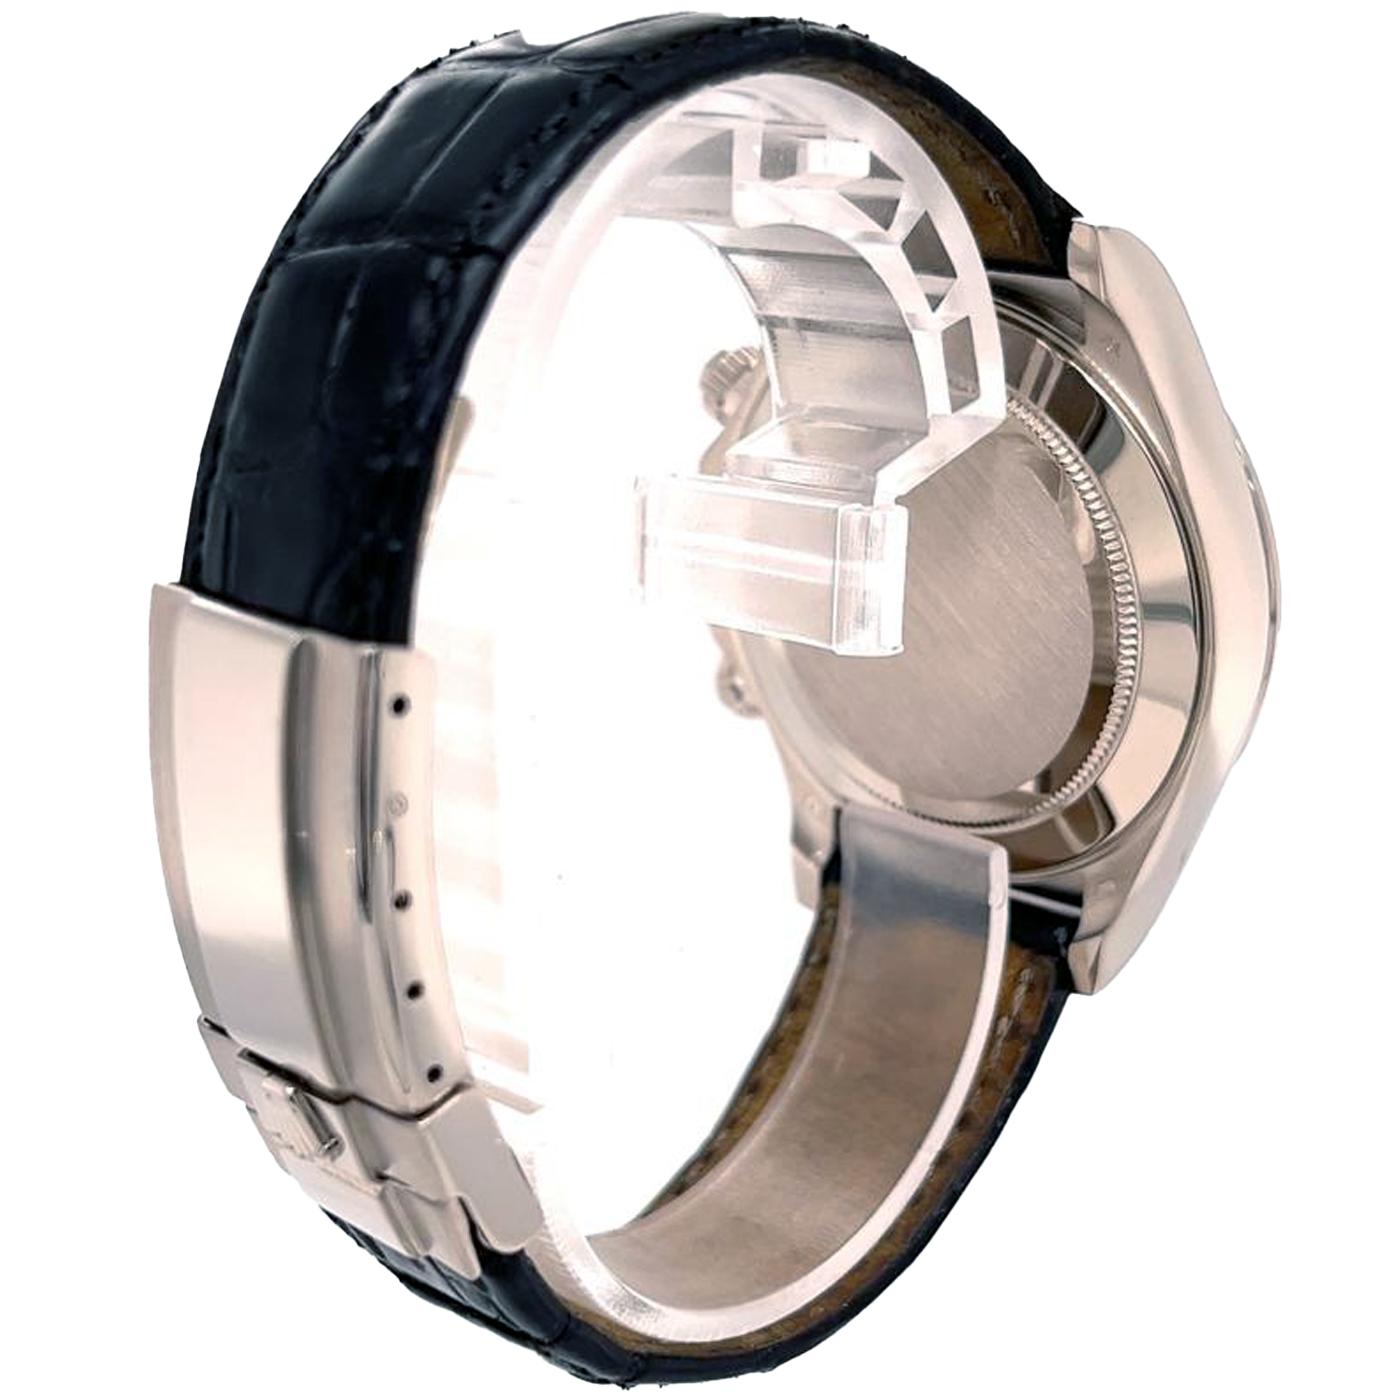 Rolex Daytona Cosmograph White Gold MOP Diamond Bezel Watch 116589RBR In Good Condition For Sale In Aventura, FL